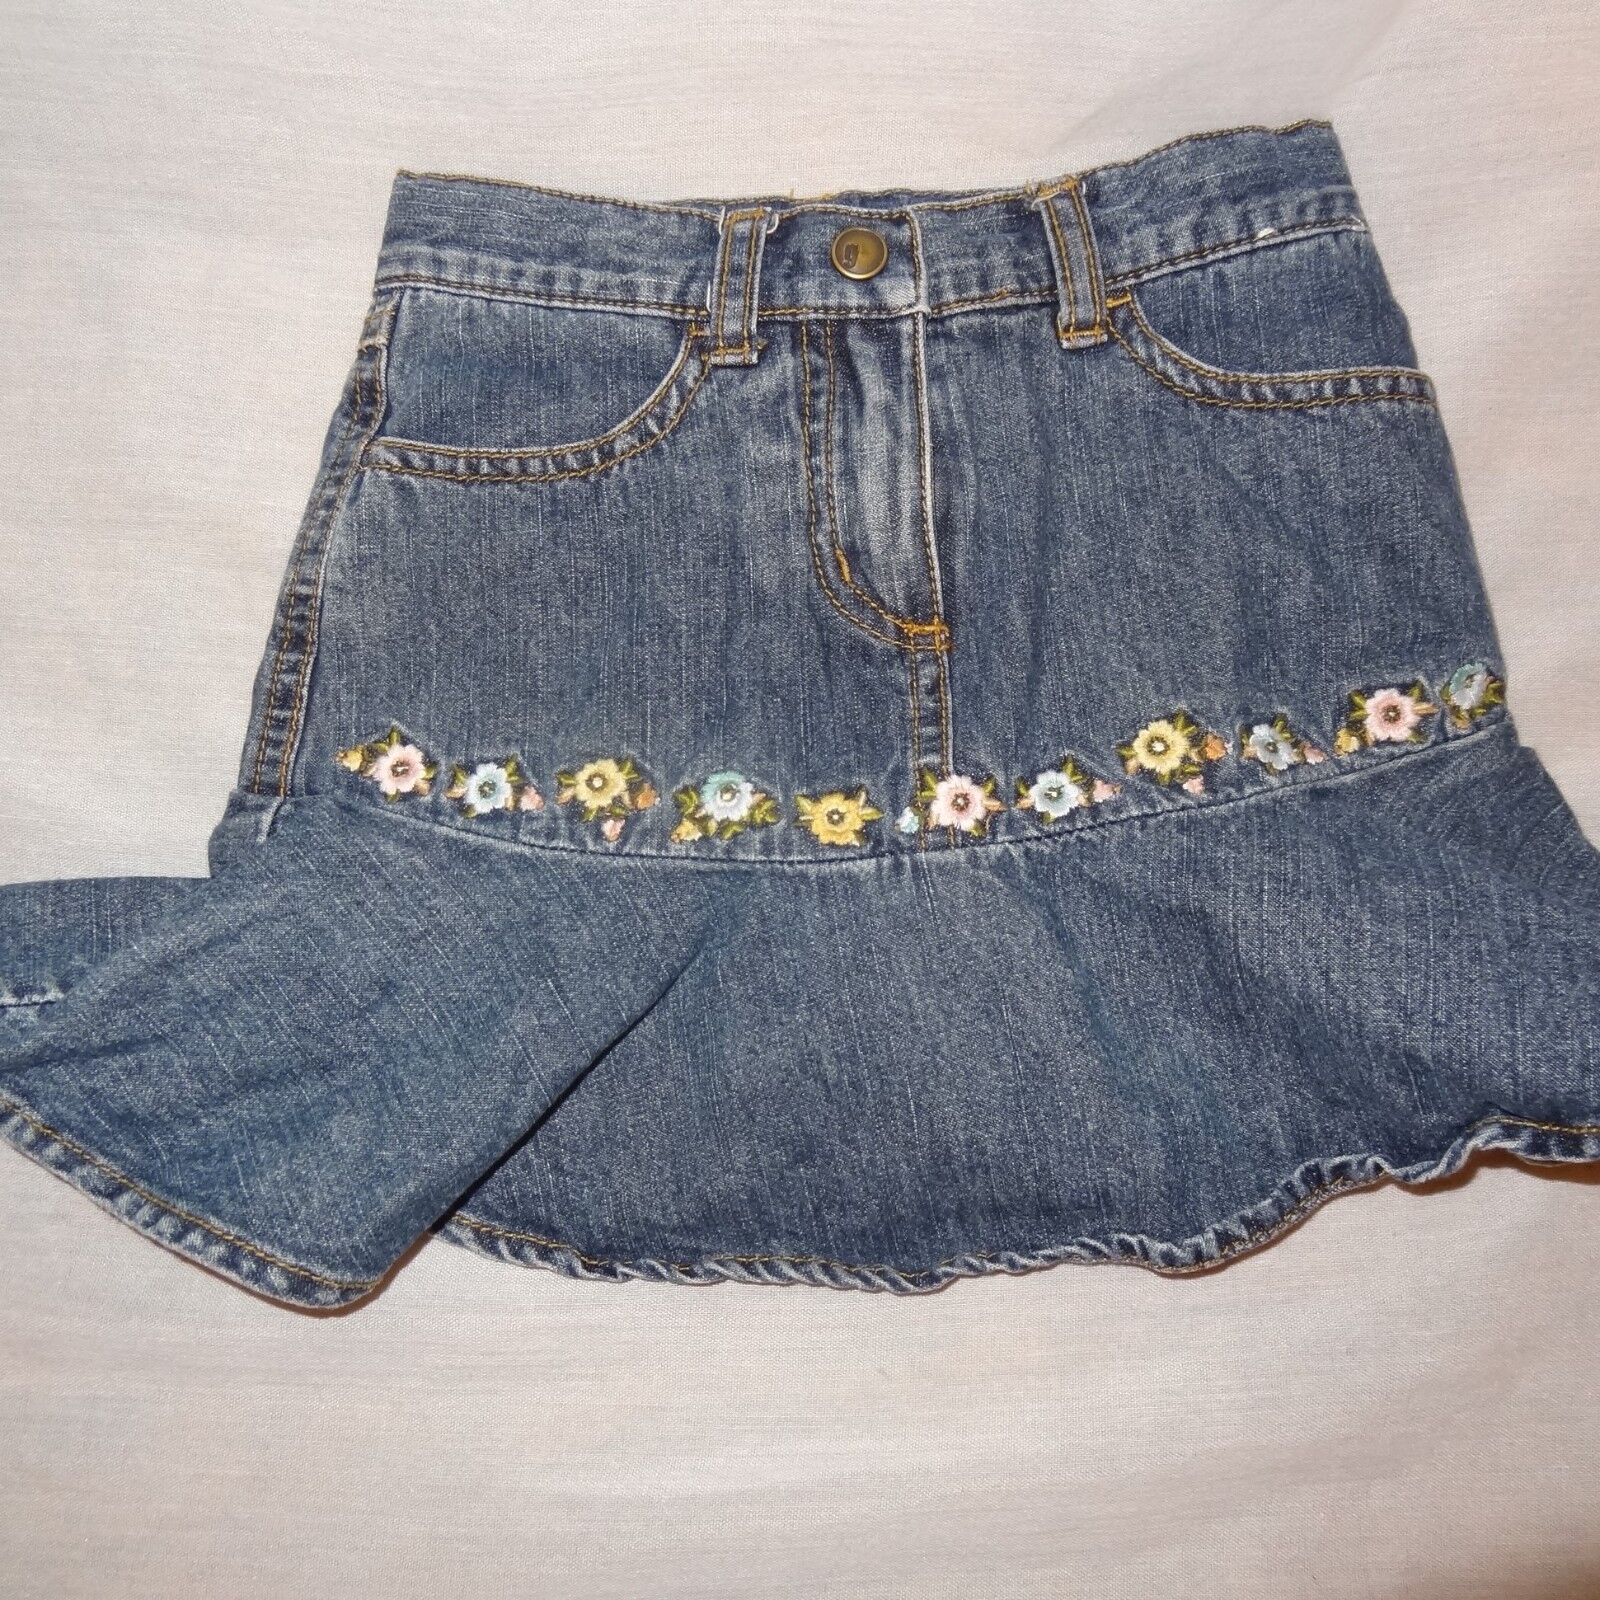 Skort Jean Denim Size 3T 3 Girls Ruffle Flowers Shorts Skirt C...